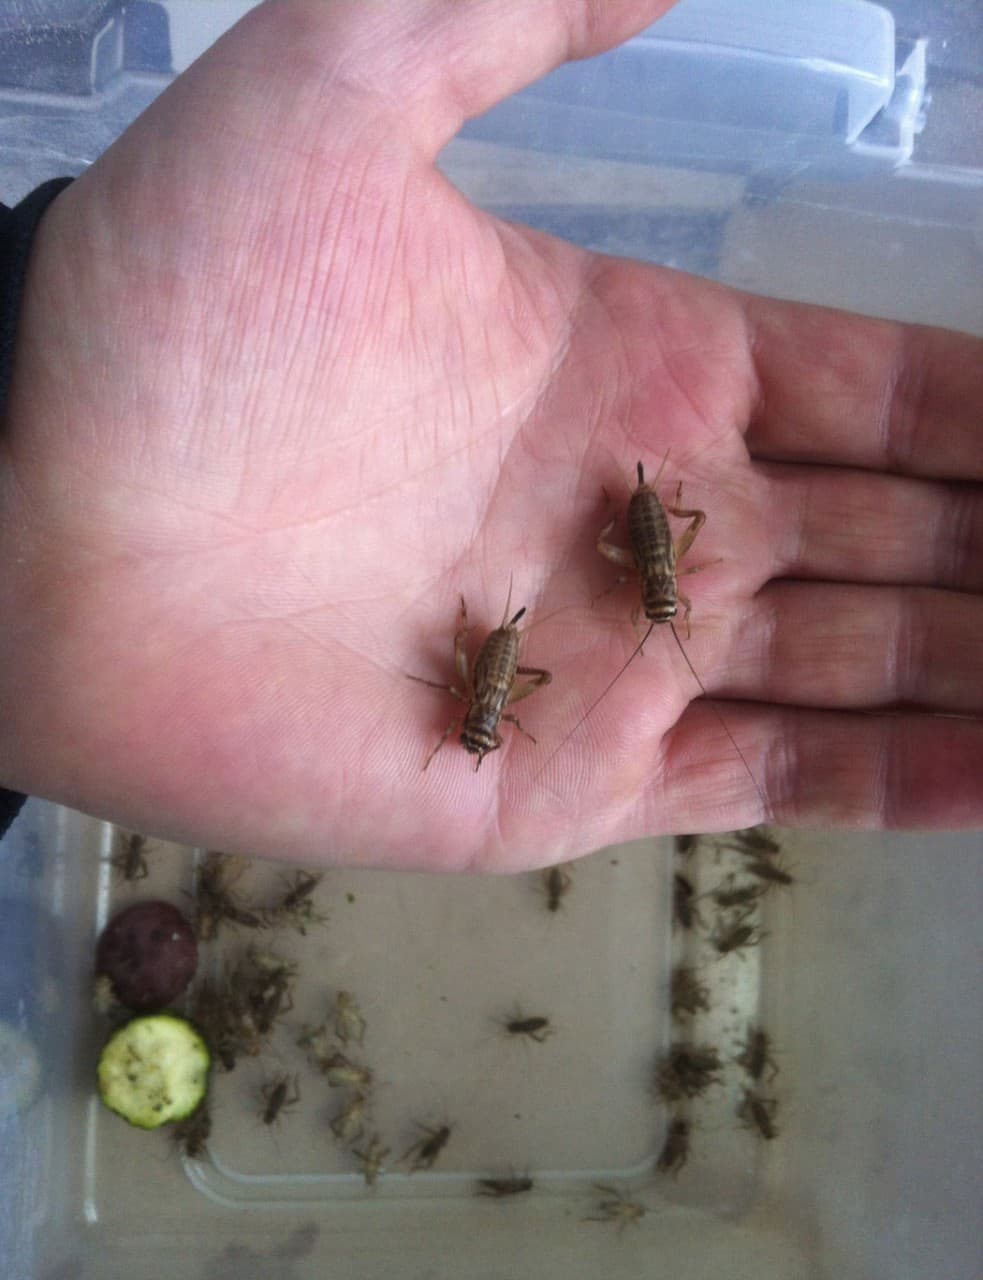 John Osorio-Buck breeds crickets to eat at the deCordova Museum. (Deborah Lee)